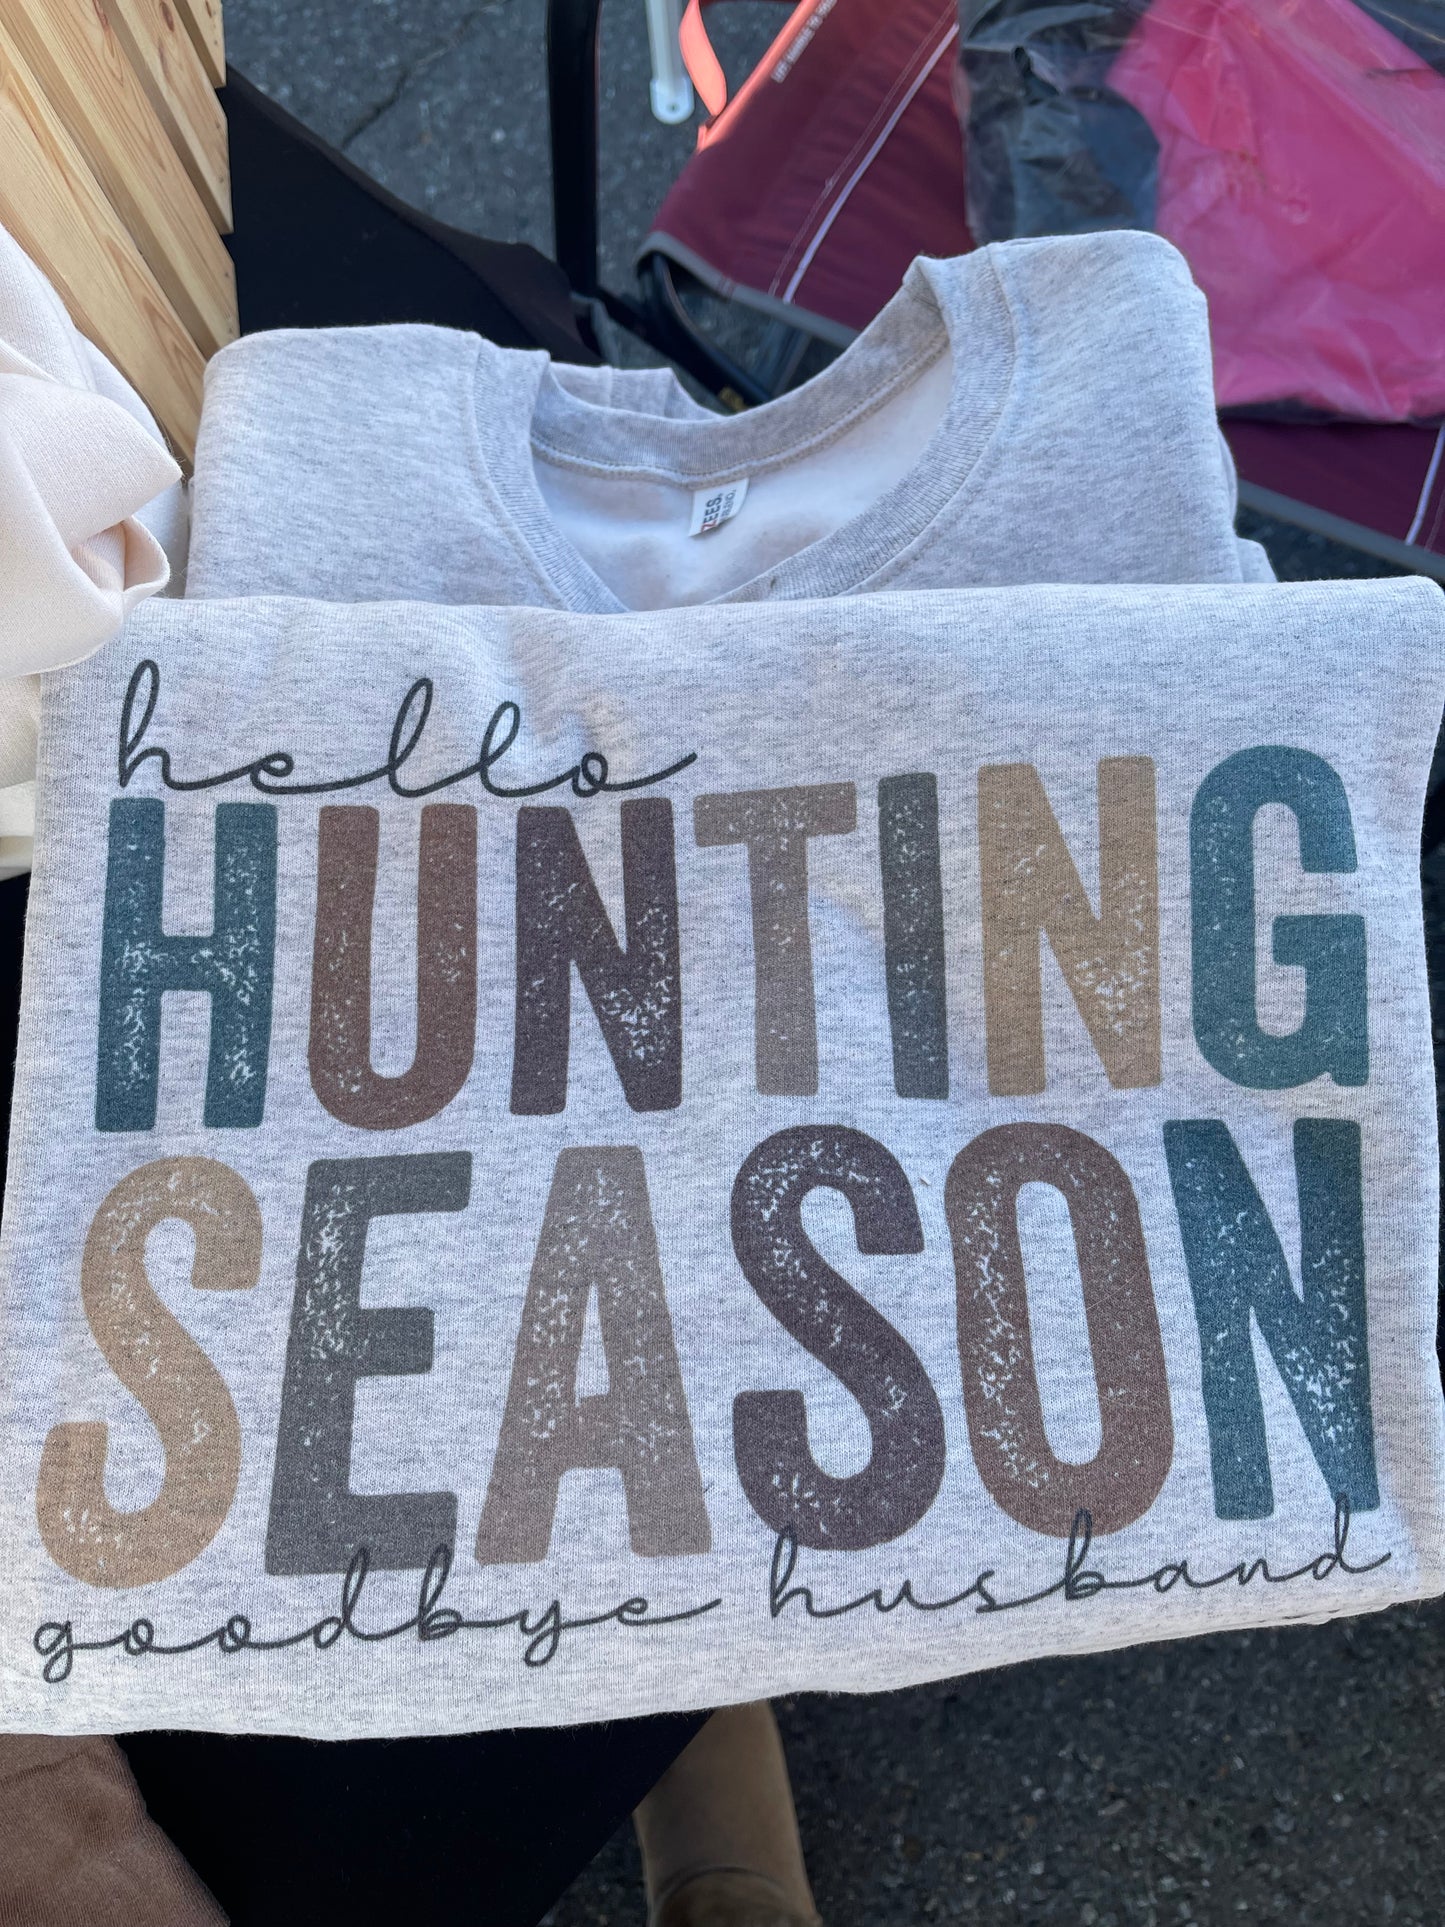 Hunting Season